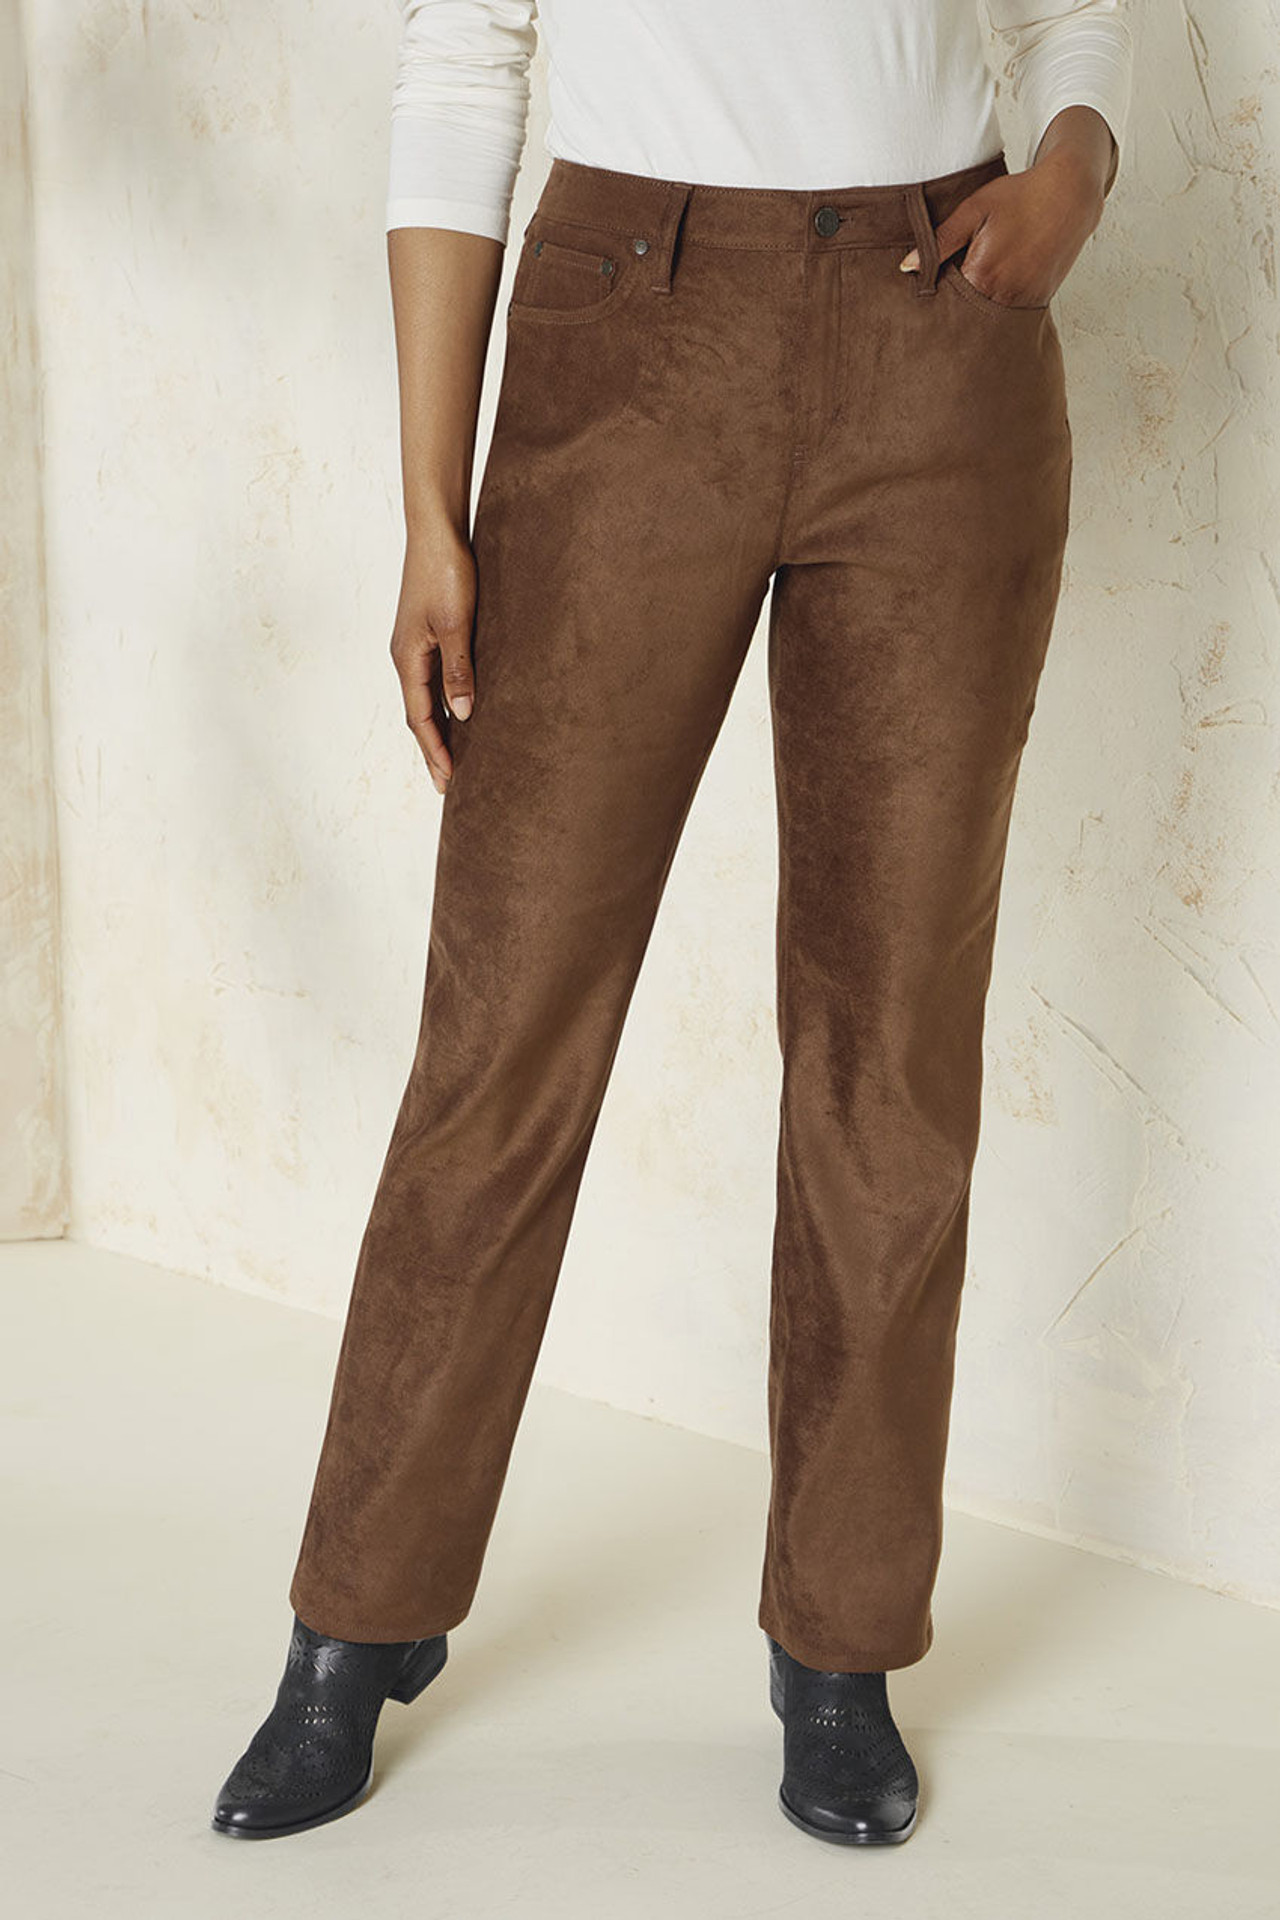 Womens Cognac Brown Straight Leg Leather Pants - High Waist